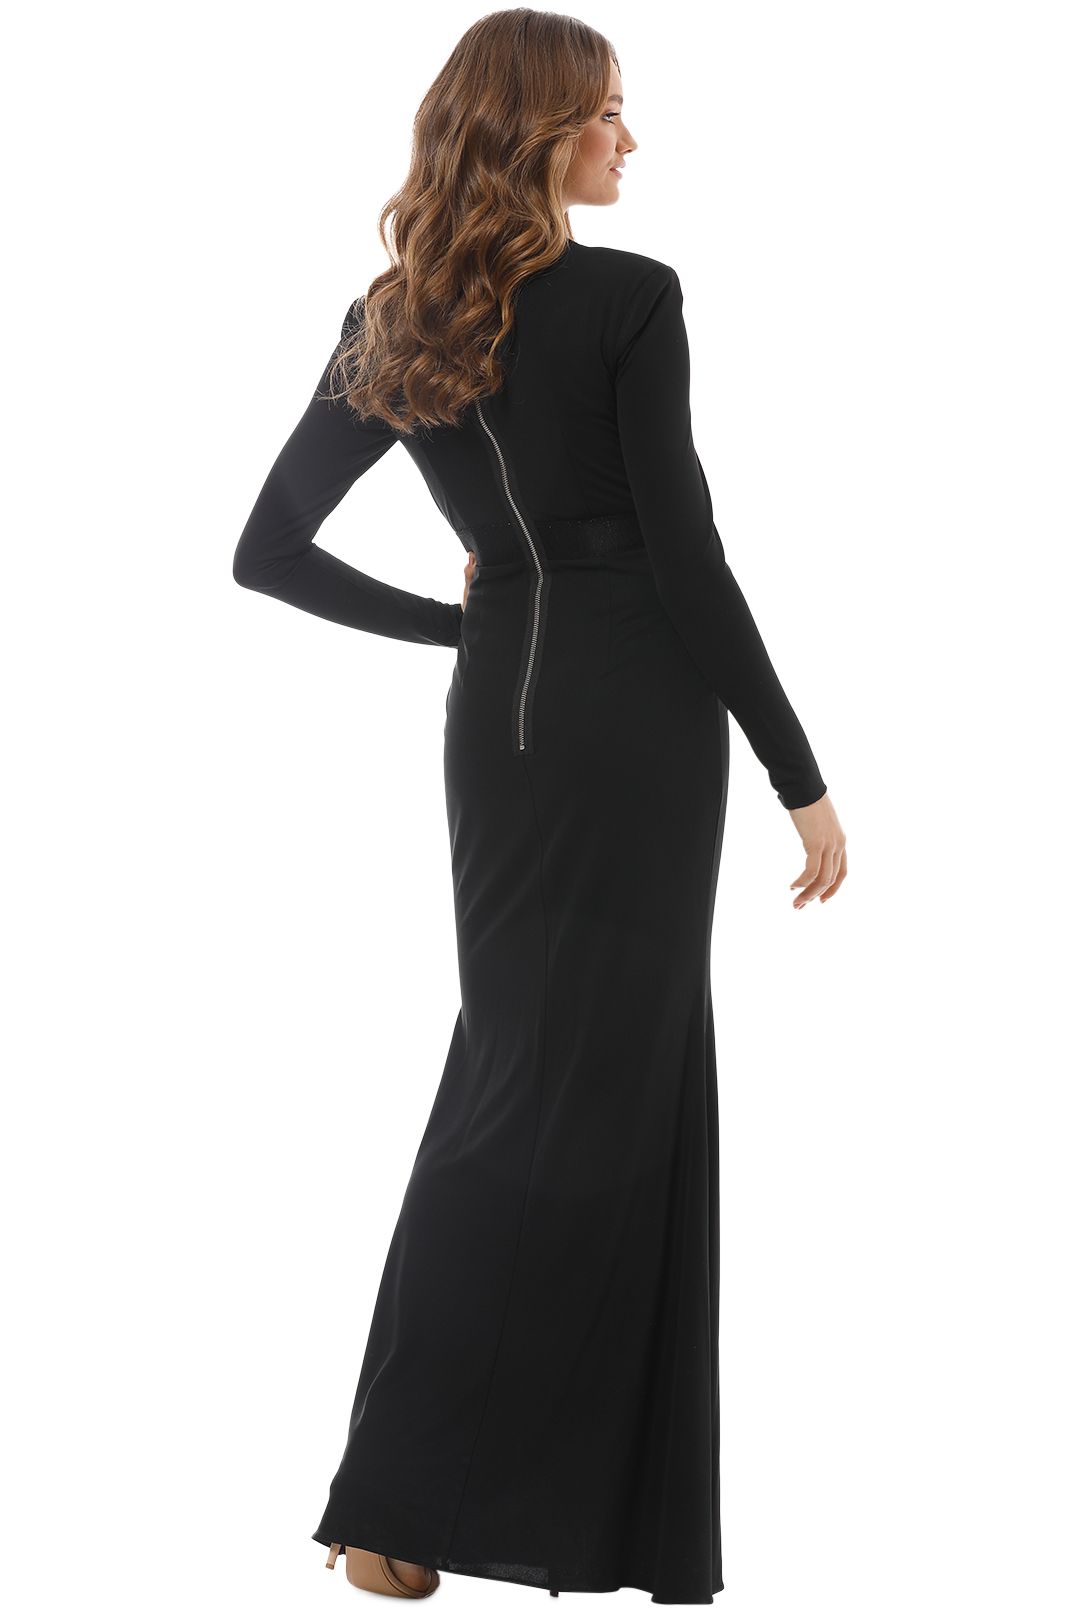 Alex Perry - Nadine V Long Sleeve Gown - Black - Back